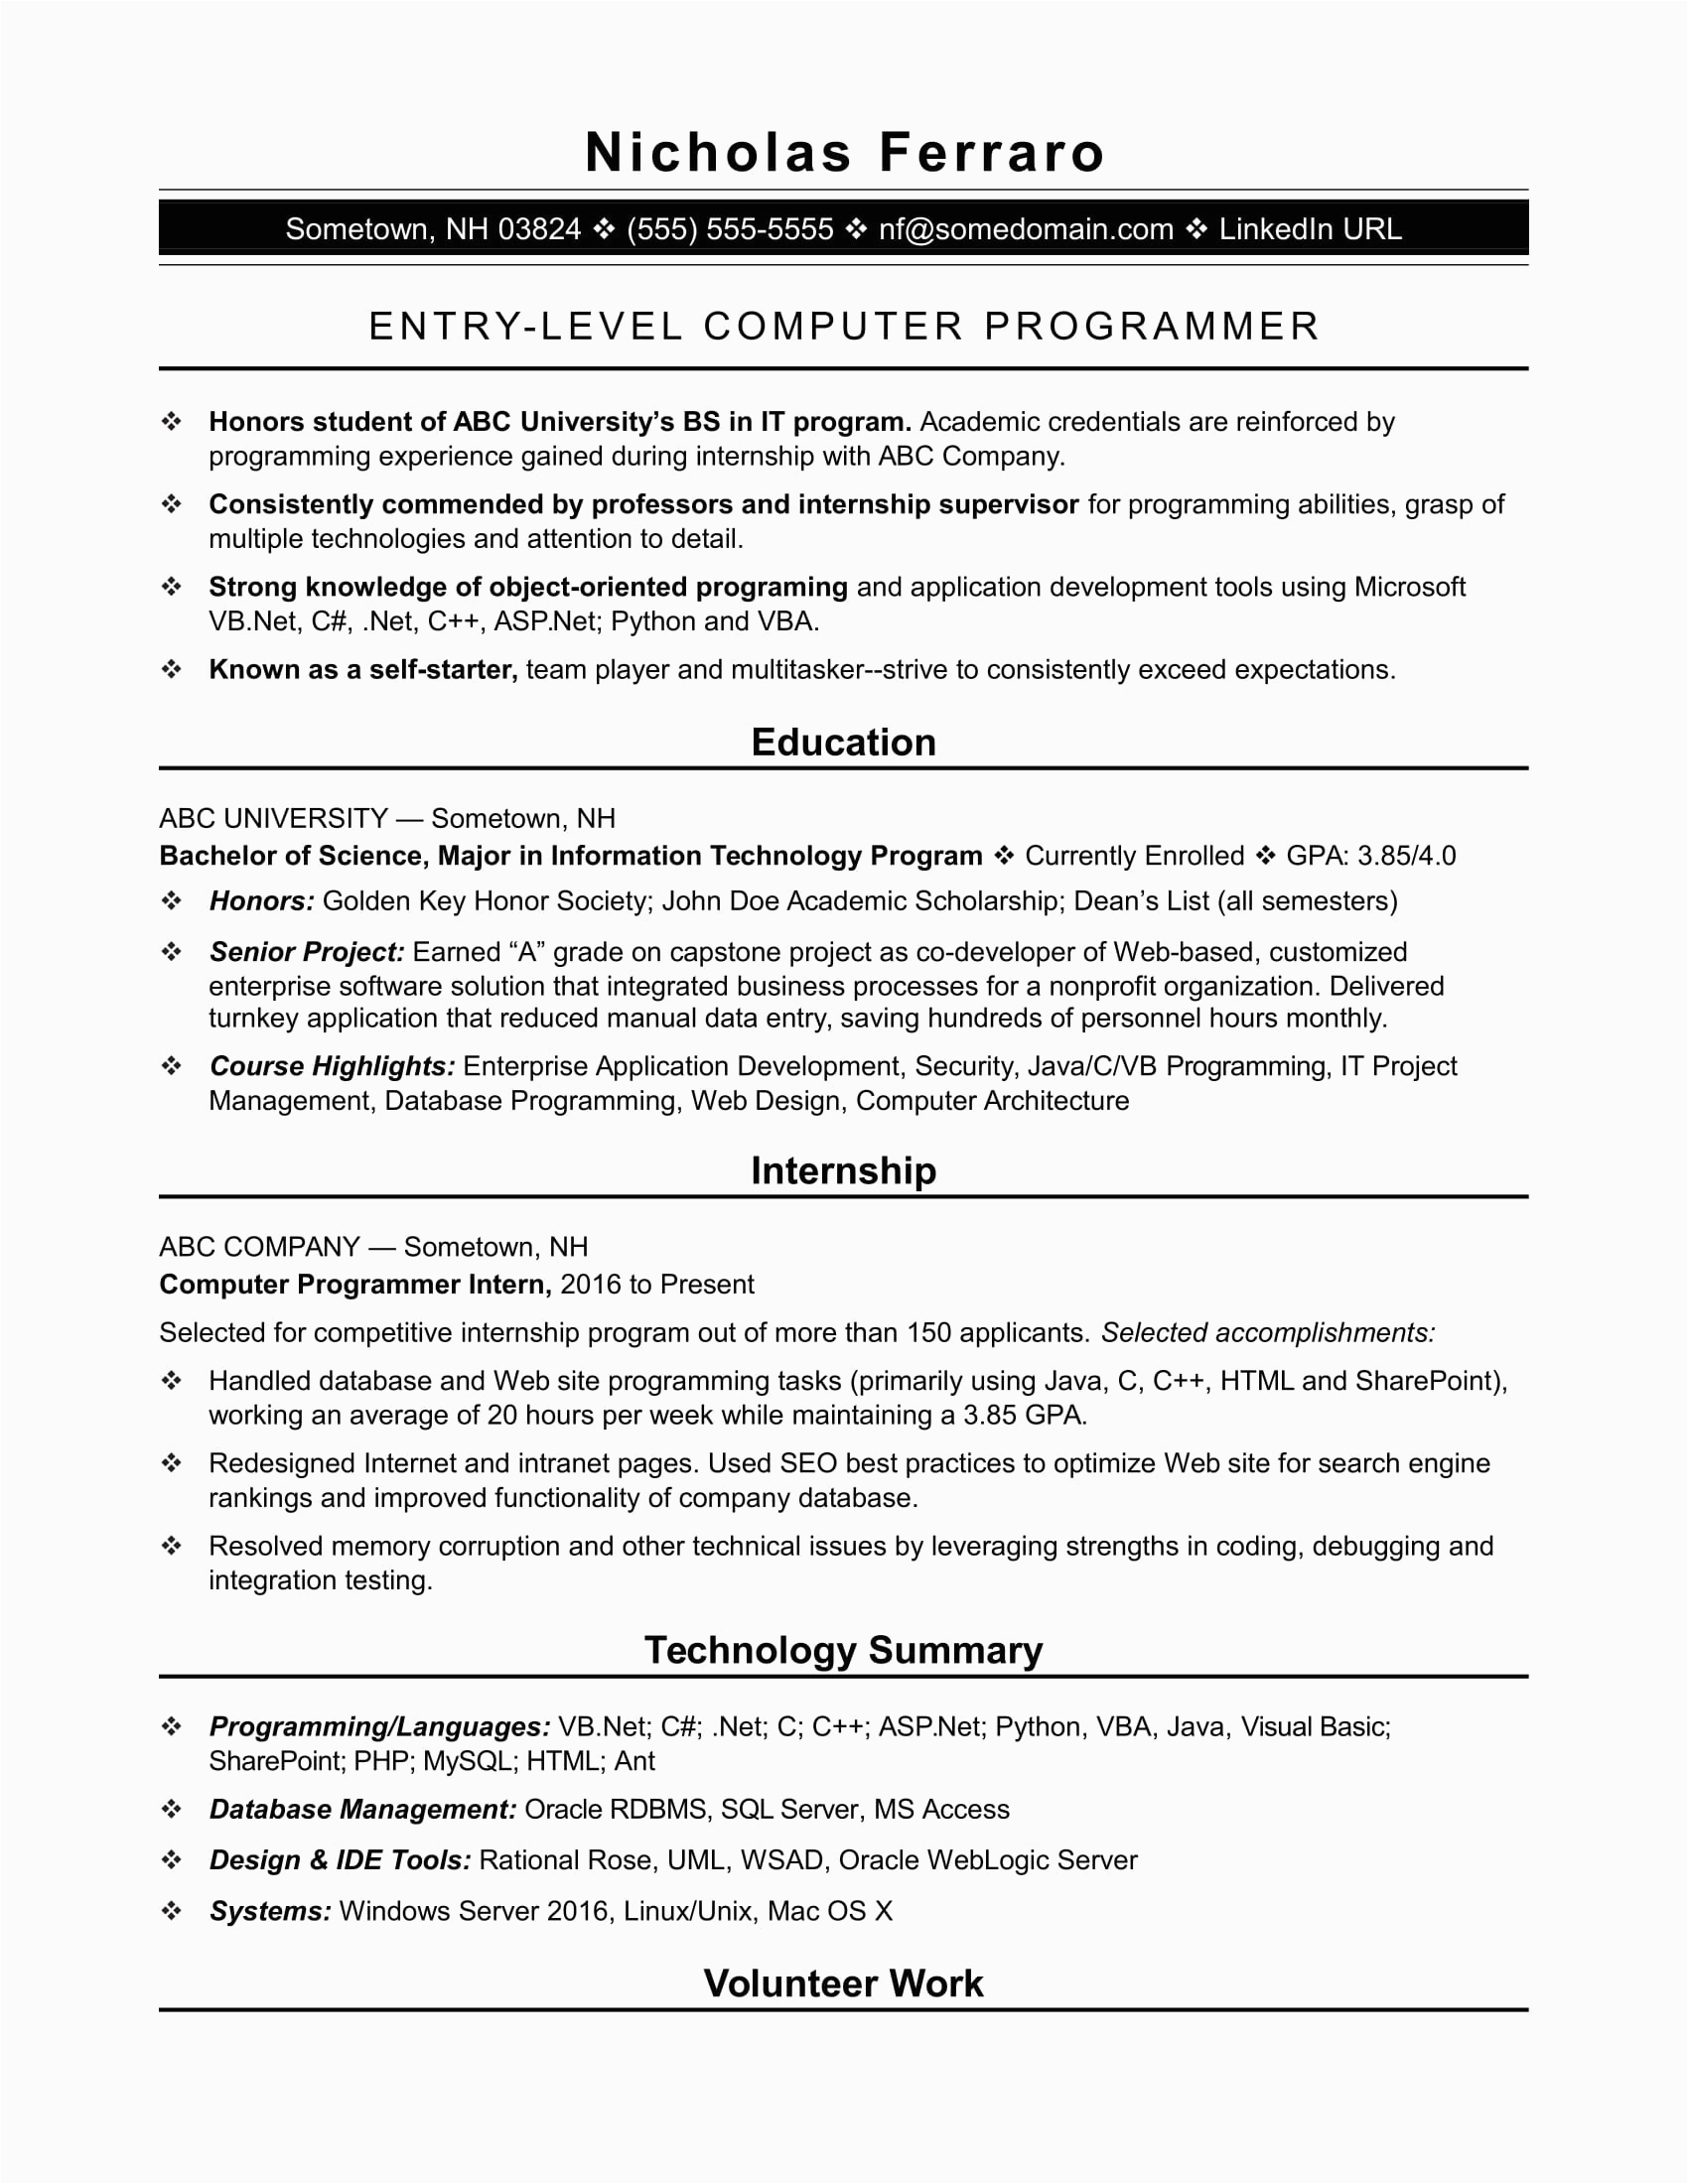 Sample Computer Vision Resumes Entry Level Entry Level Programmer Resume